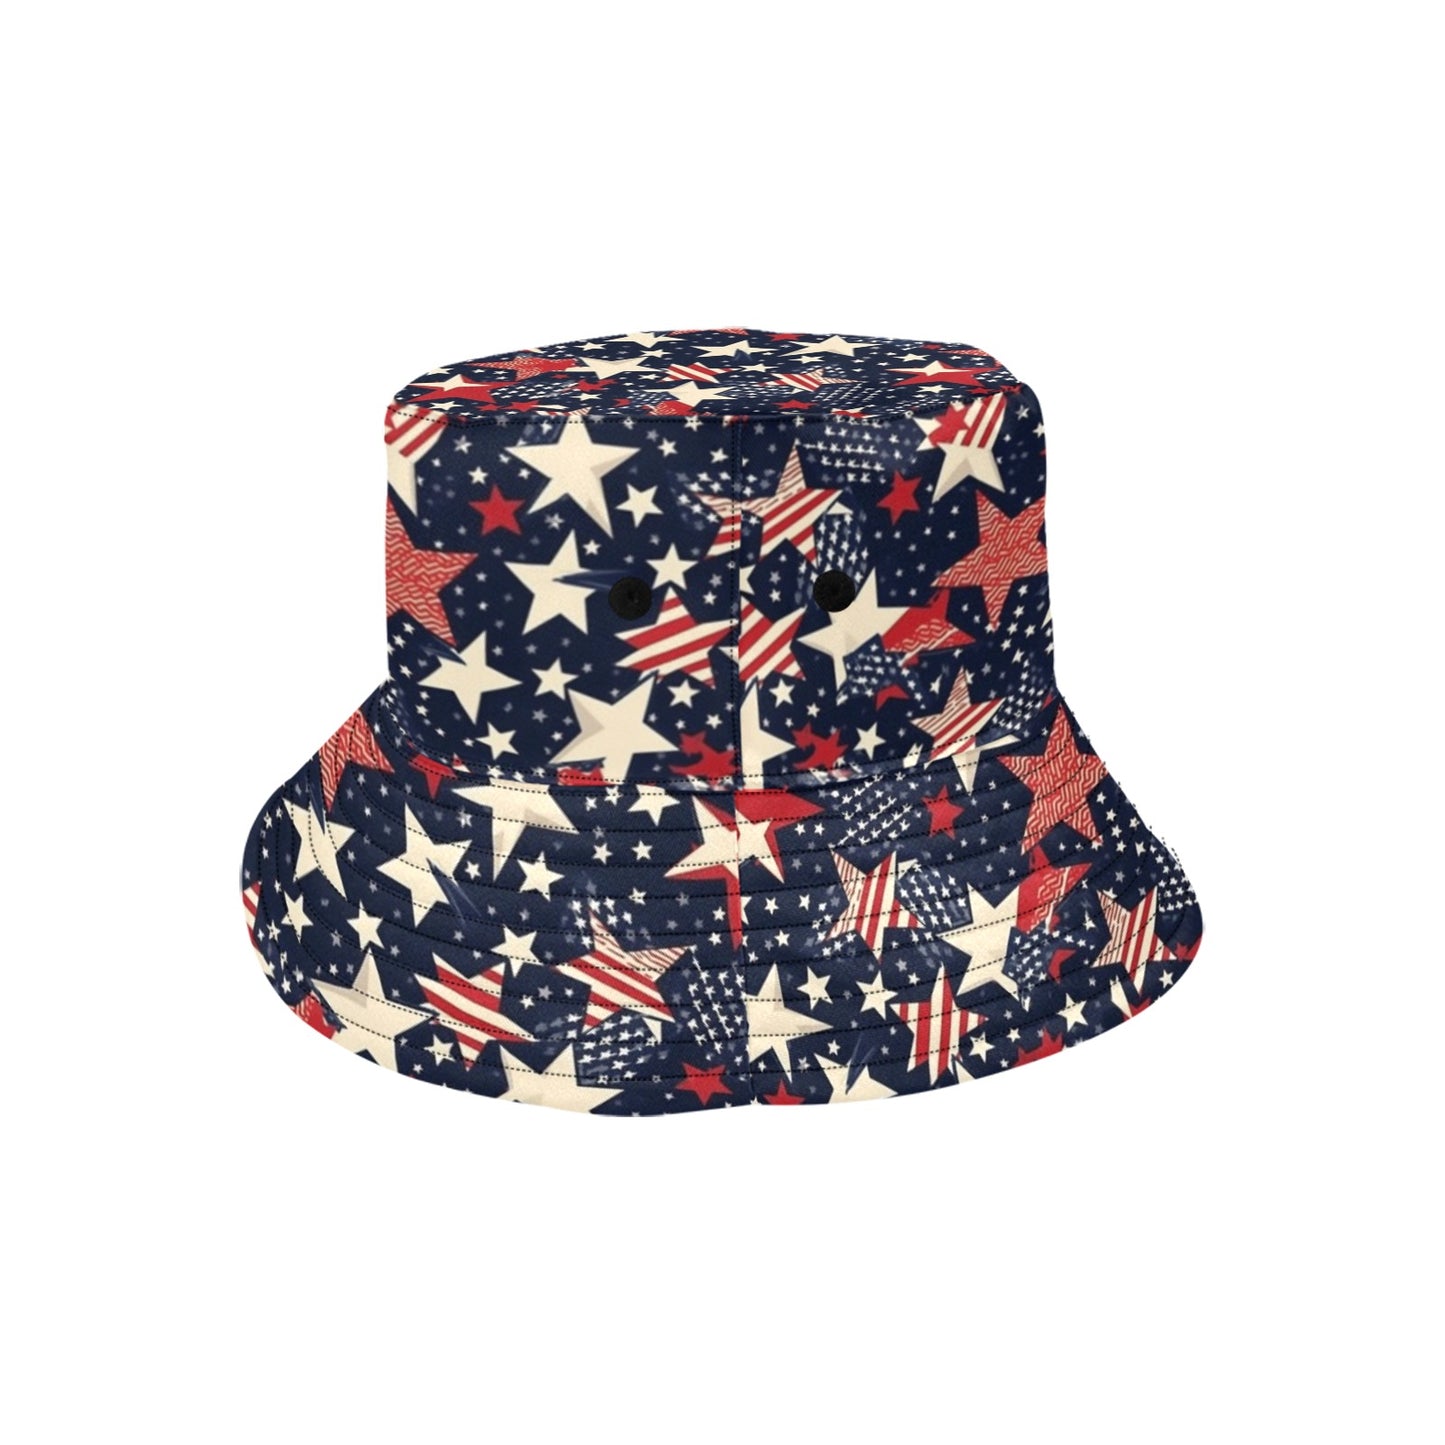 American Flag Bucket Hat, Red White Blue 4th of July USA Patriotic Stars Stripes Summer Festival Women Men Designer Sun Shade Cotton Twill Starcove Fashion